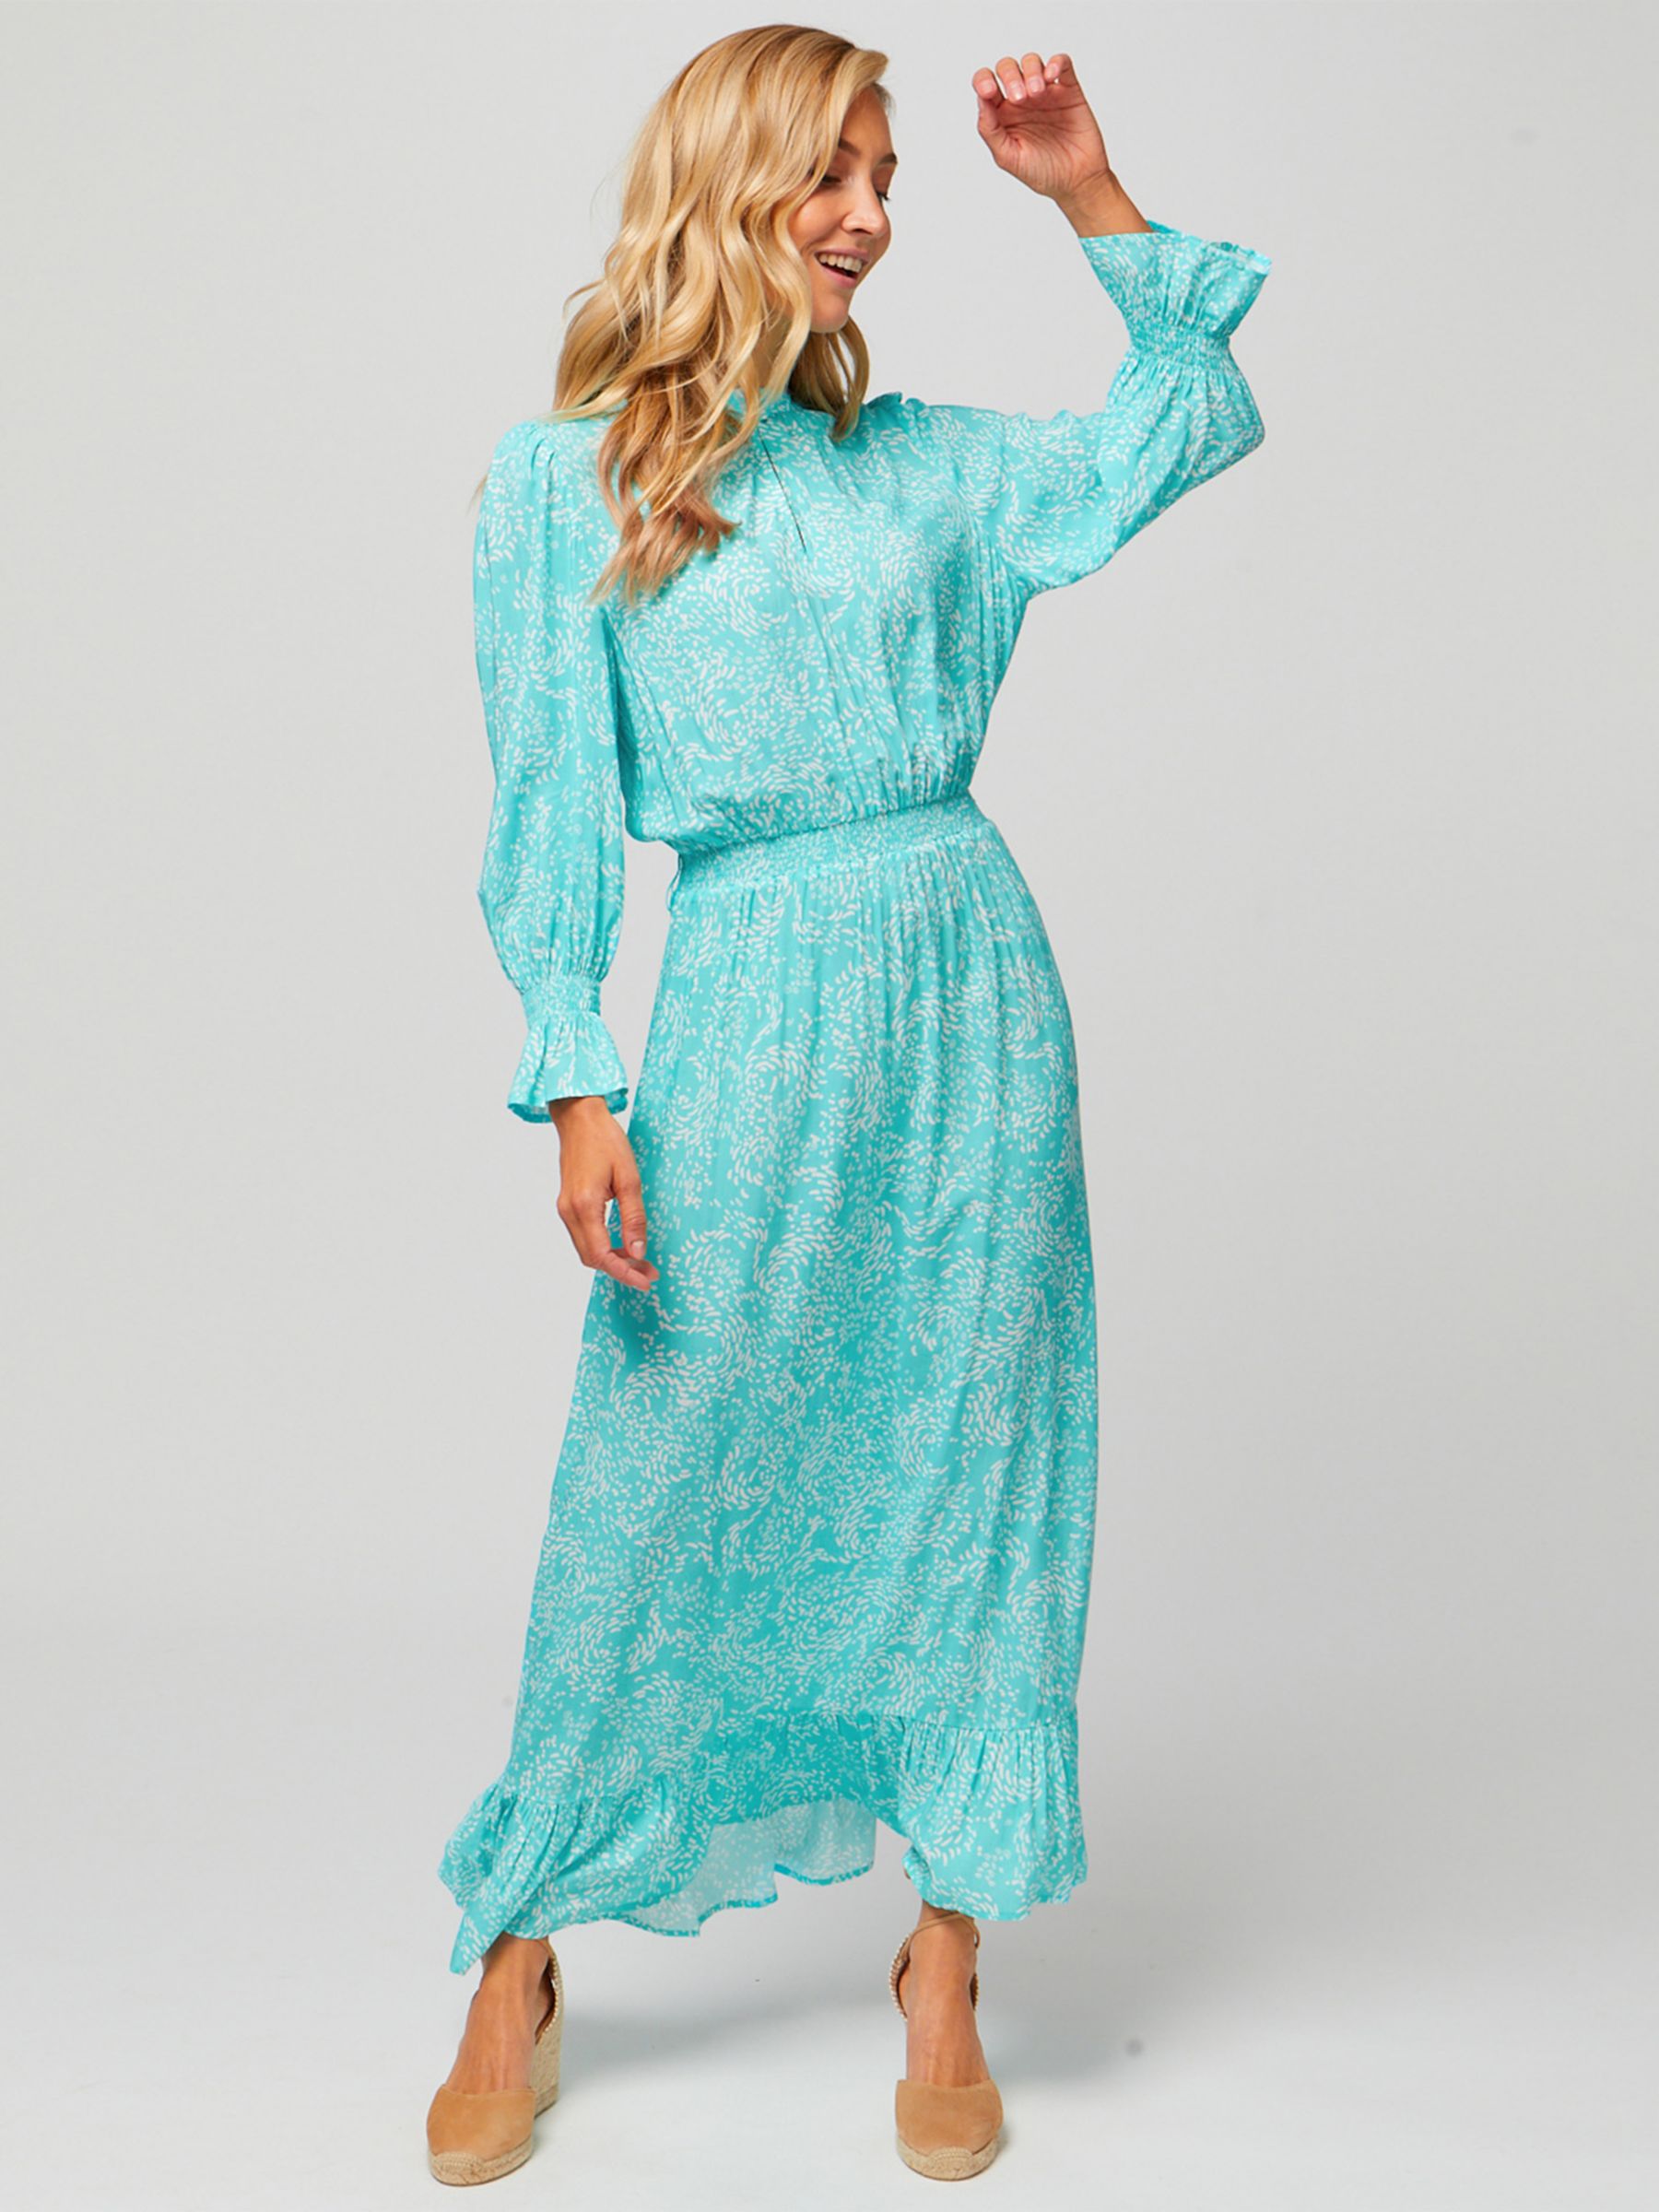 Aspiga Maeve Tiered Hem Maxi Dress, Turquoise/White, XL